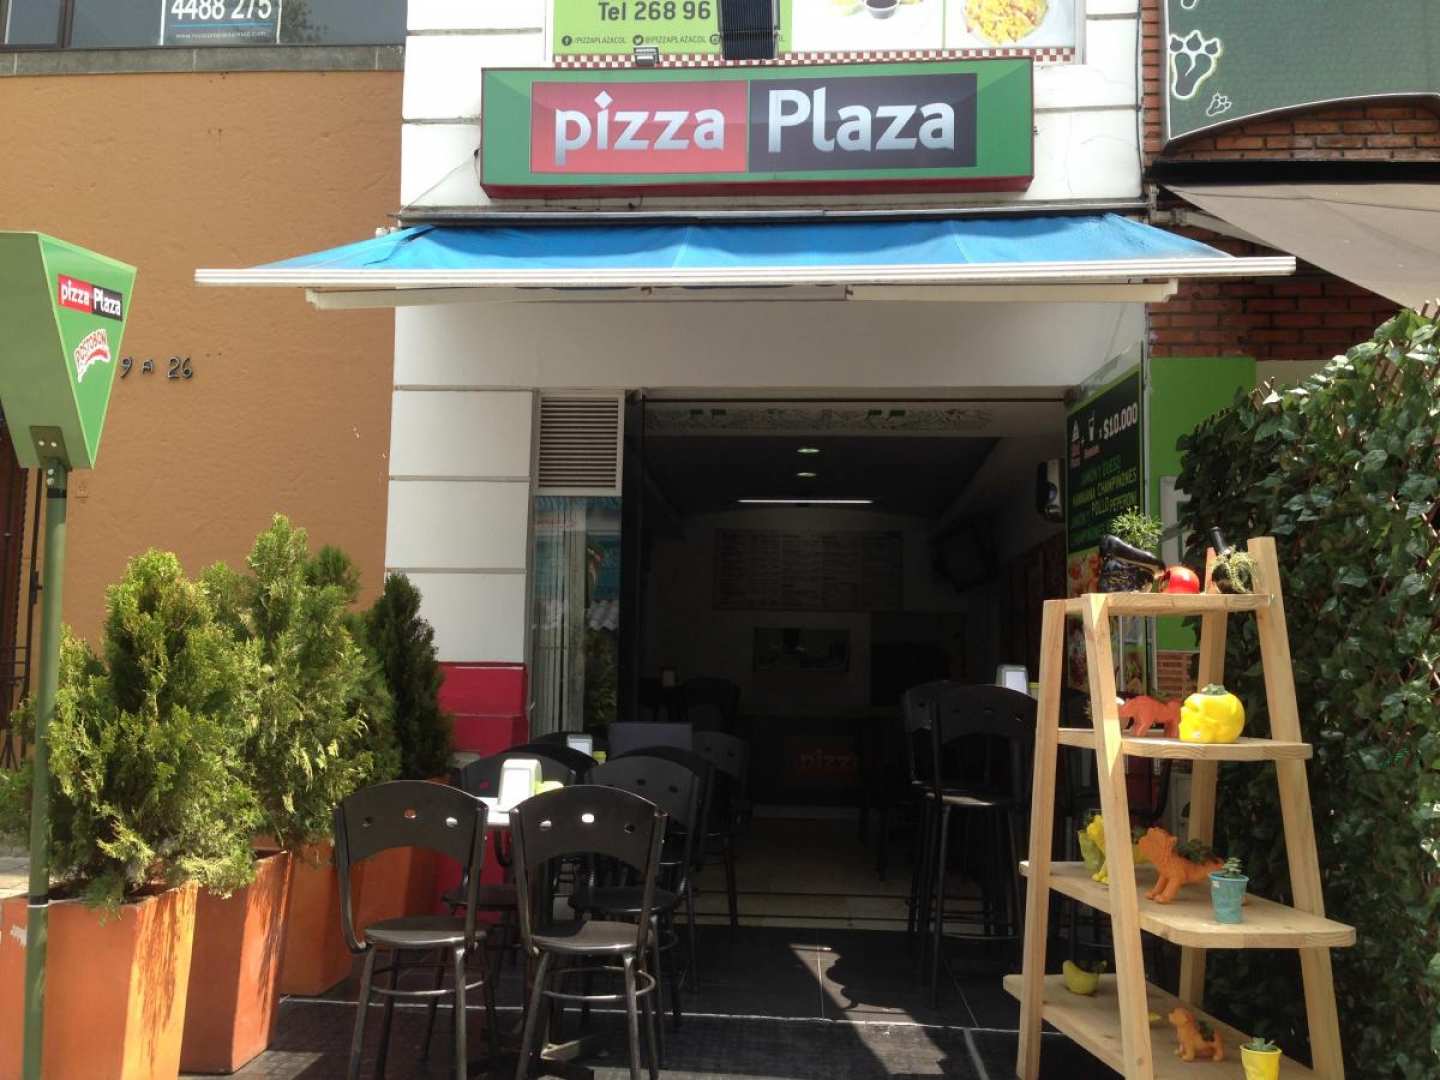 Pizza Plaza